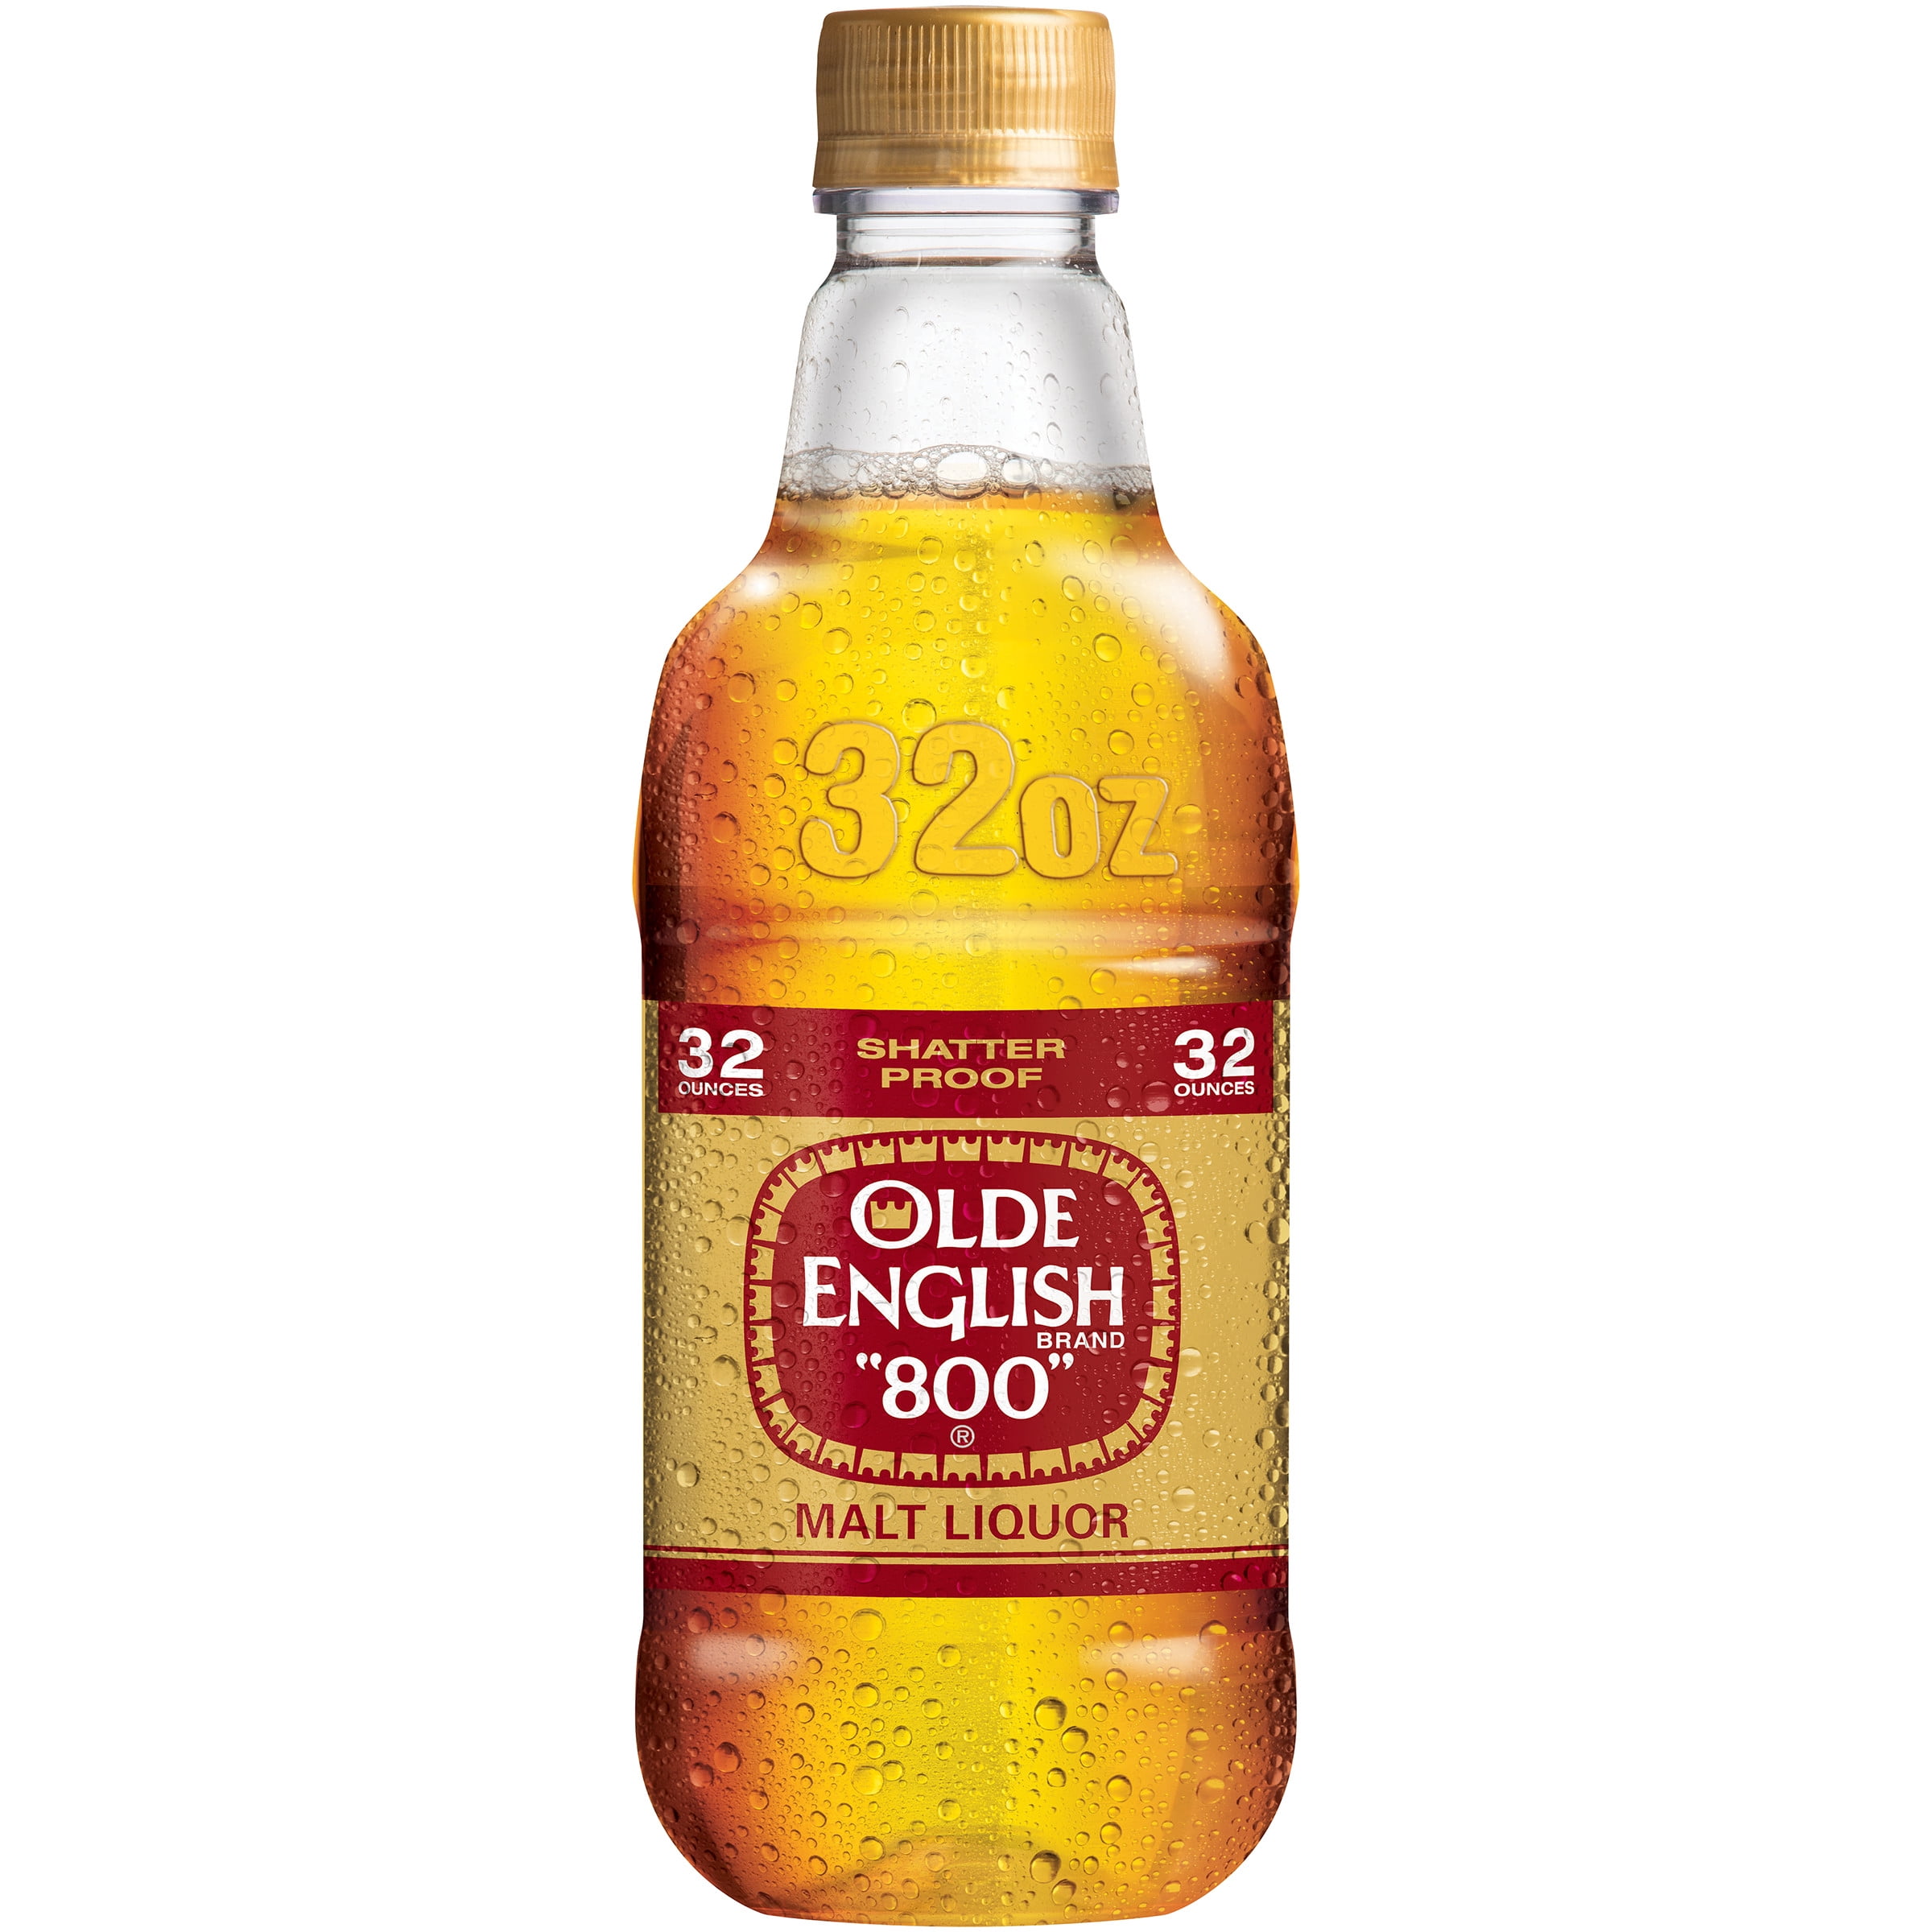 Olde English 800 Malt Liquor. Malt Liquor - Olde English brand 800. Old English пиво. Menace 800 Malt Liquor.